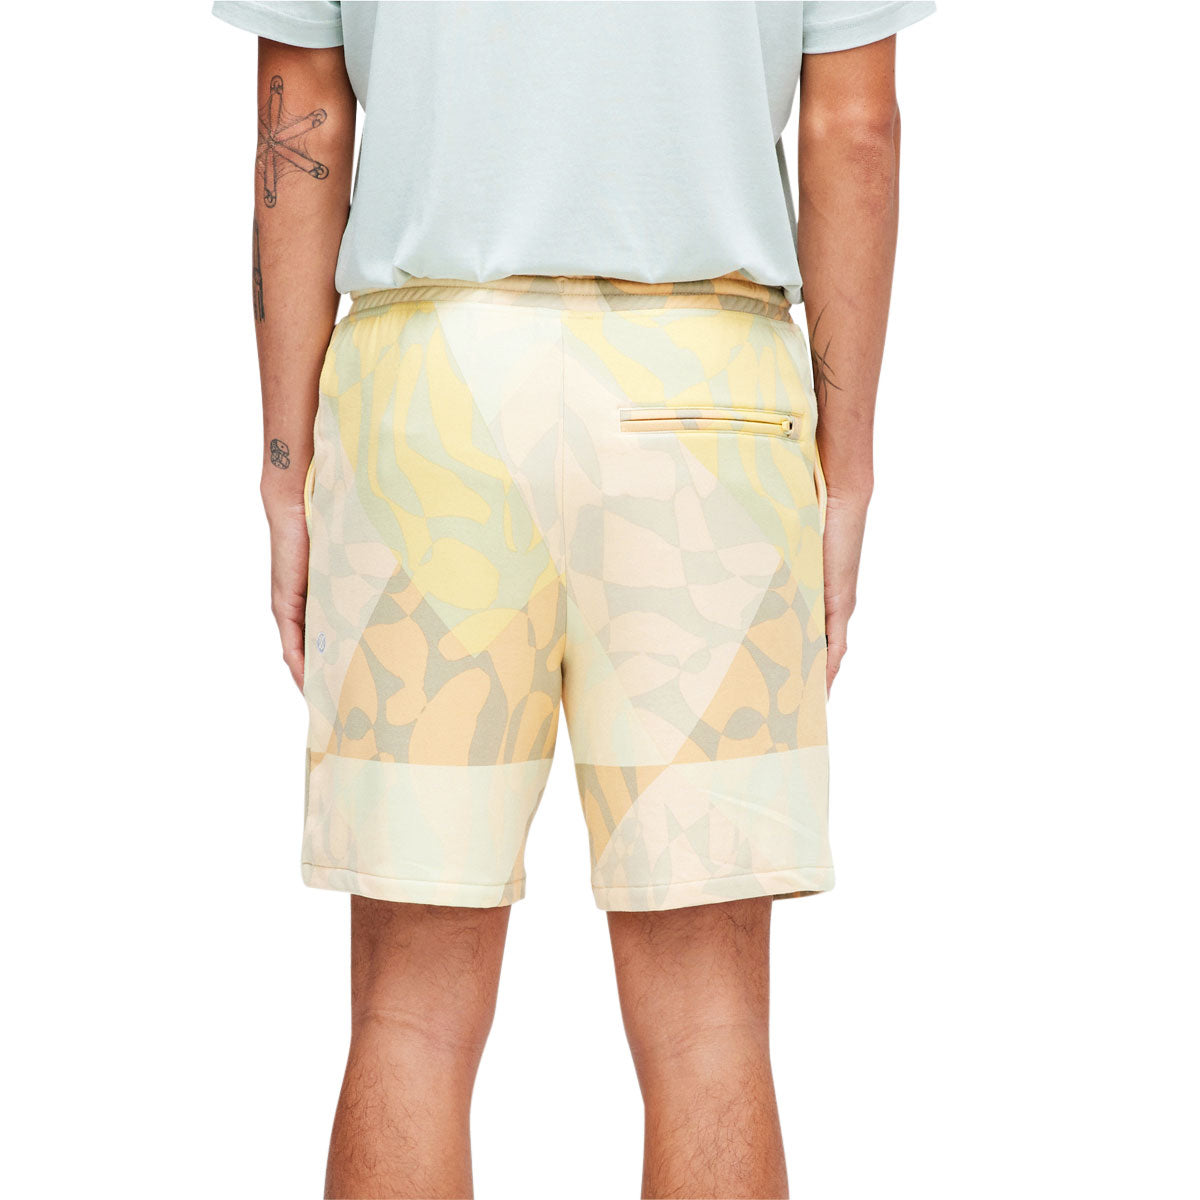 Stance Shelter Shorts - Tan image 3